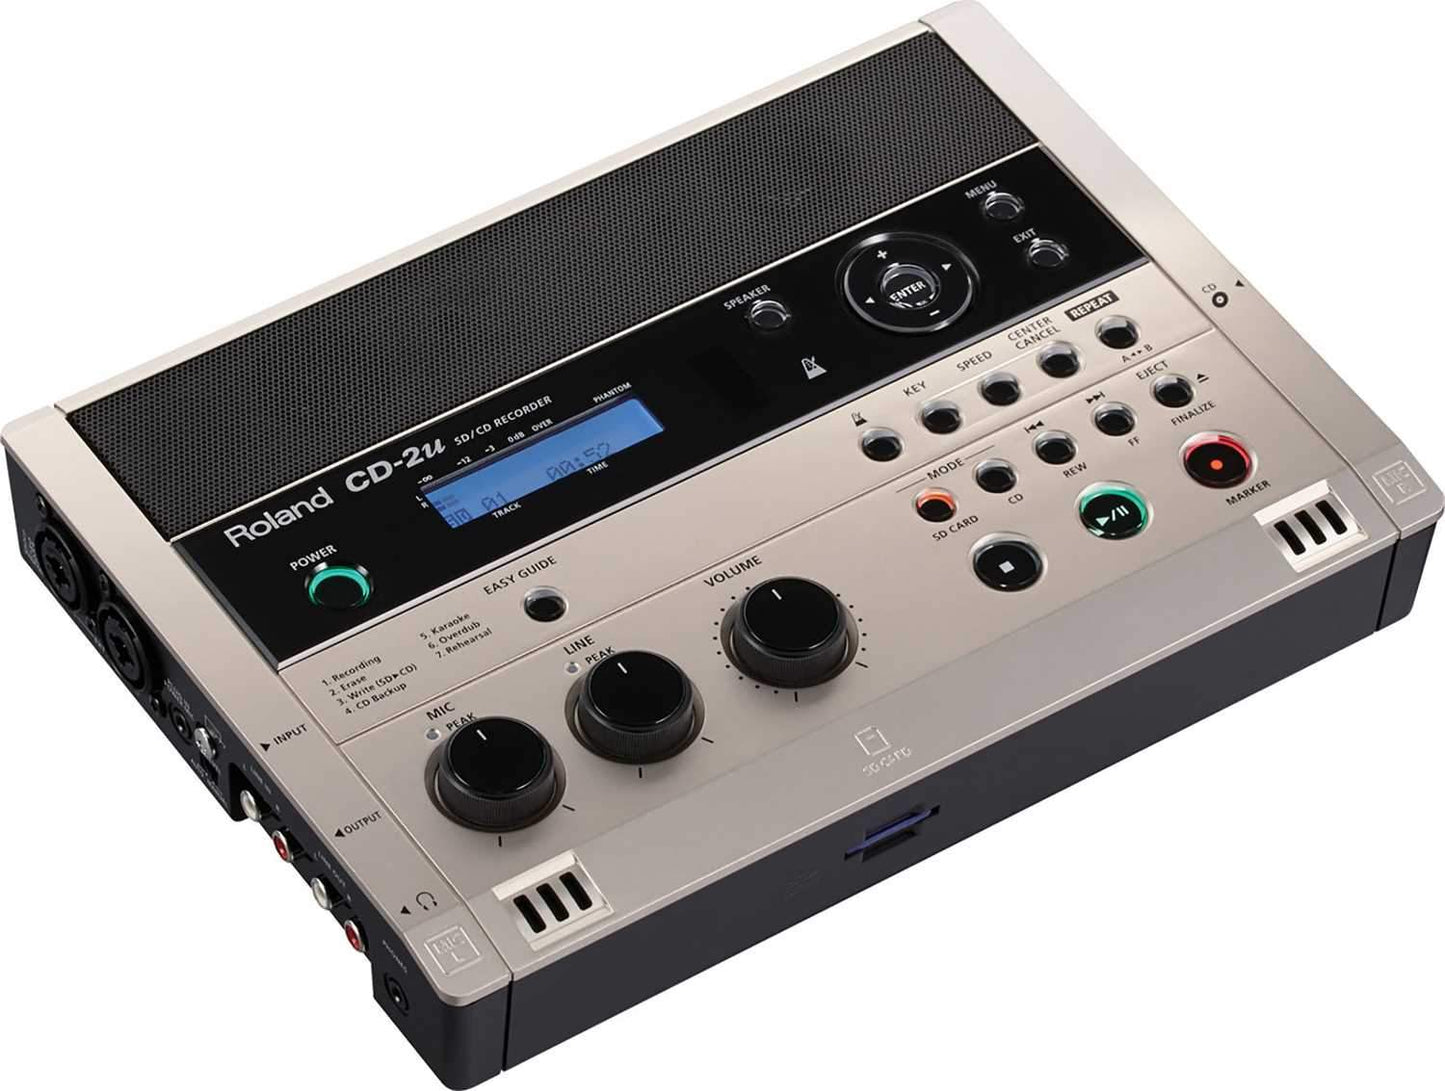 Roland CD-2U SD/CD Recorder & CD Burner - ProSound and Stage Lighting